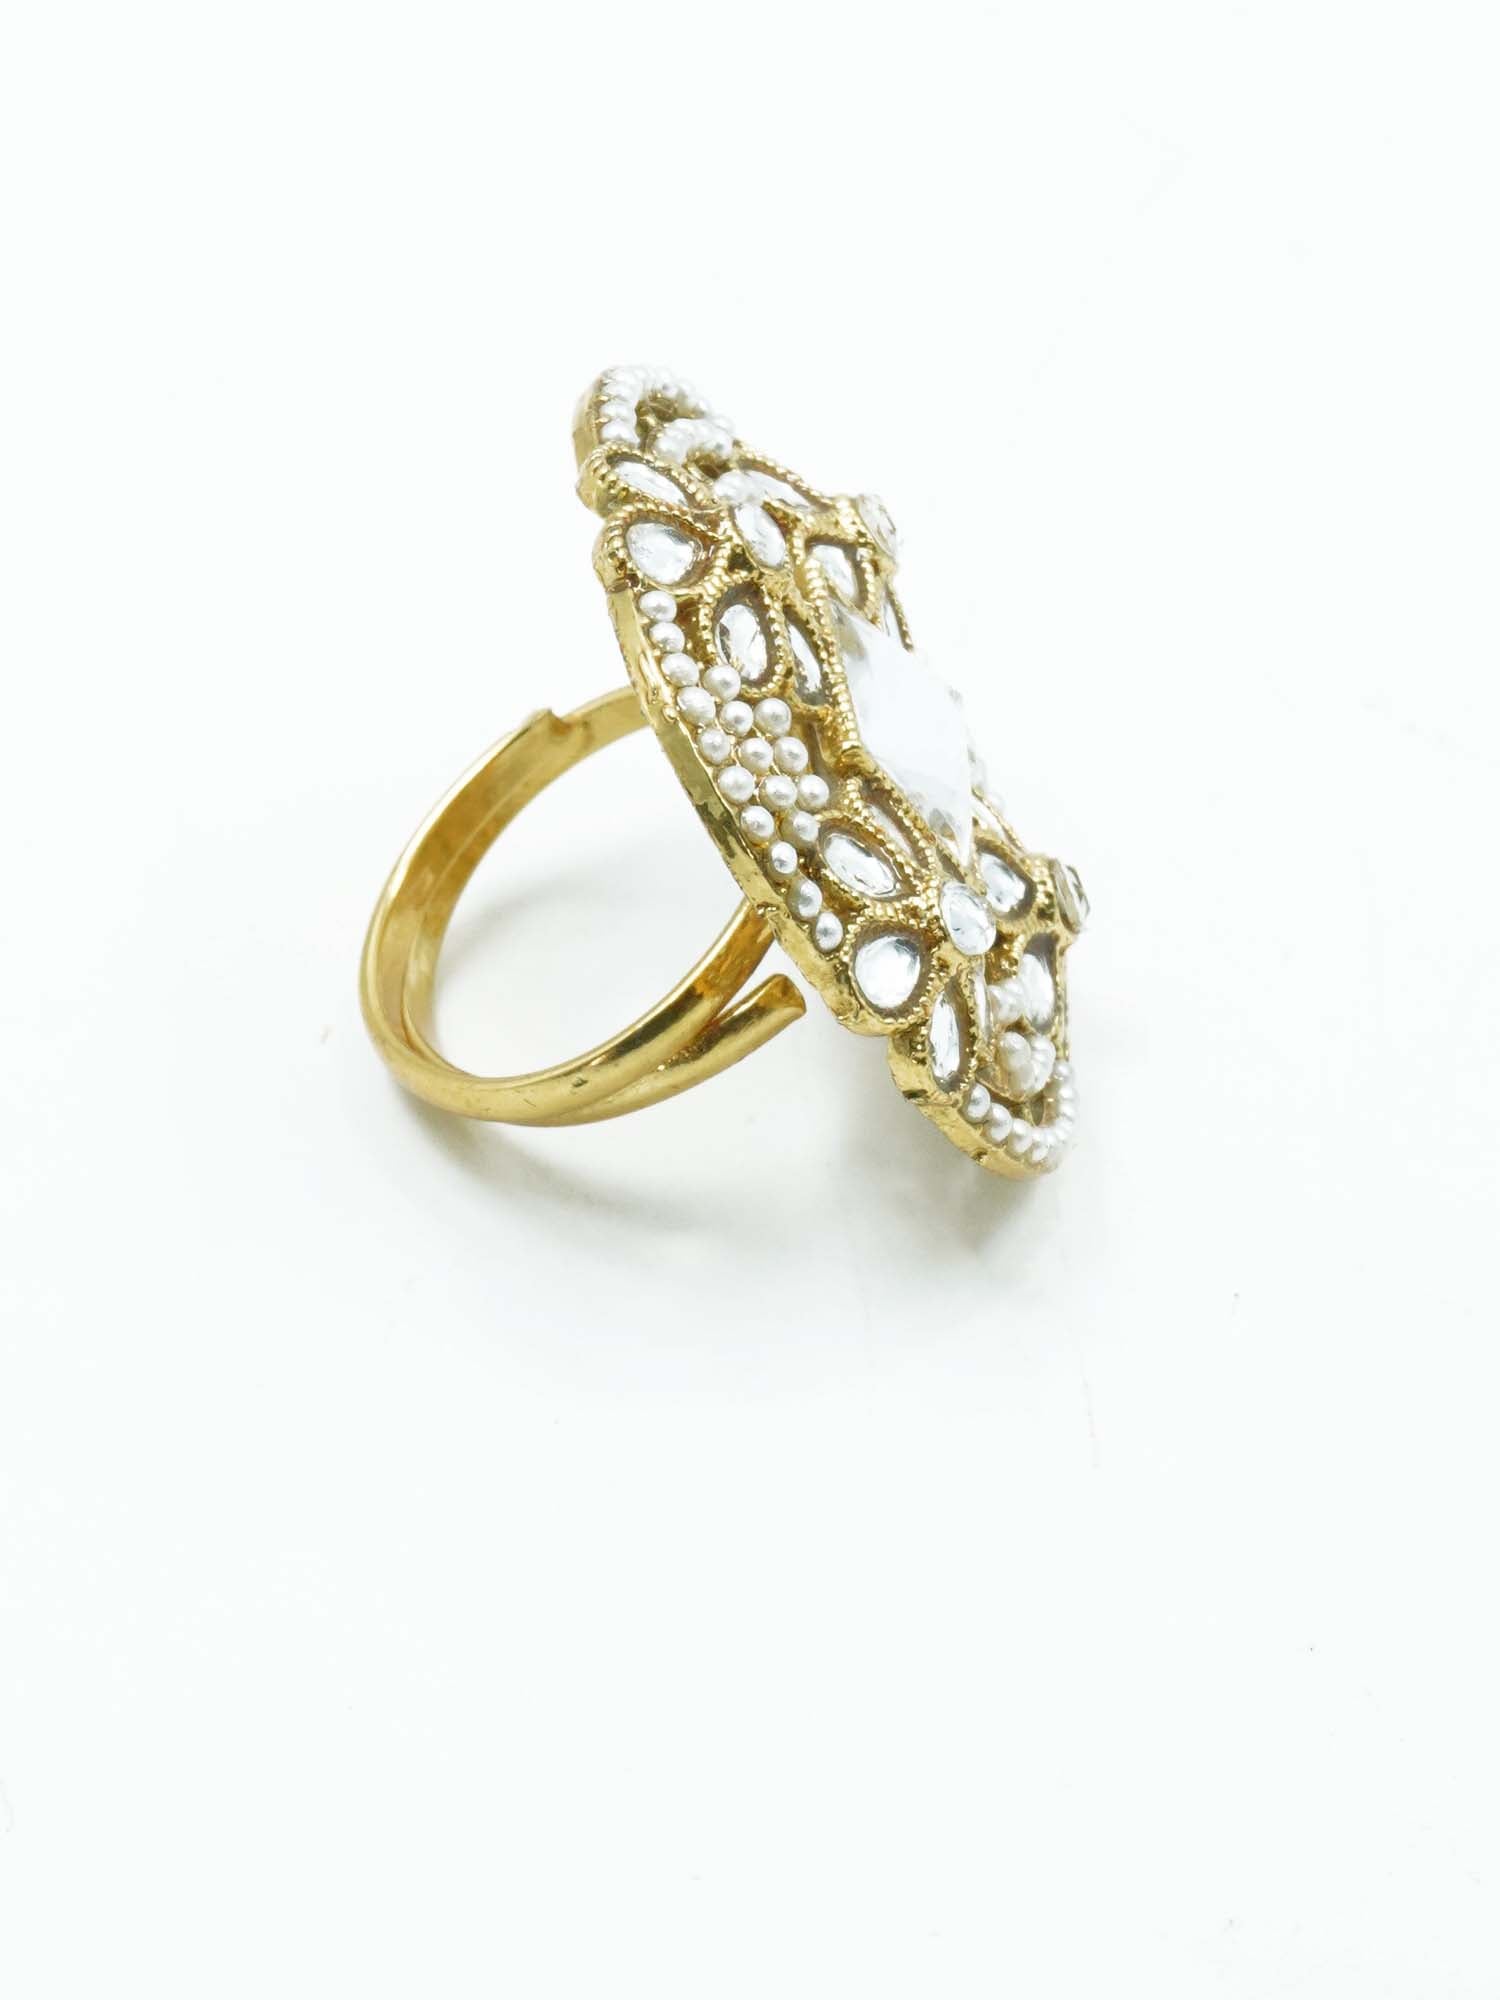 Antique Gold Plated Adjustable Size Designer Finger ring with Stones 10898N